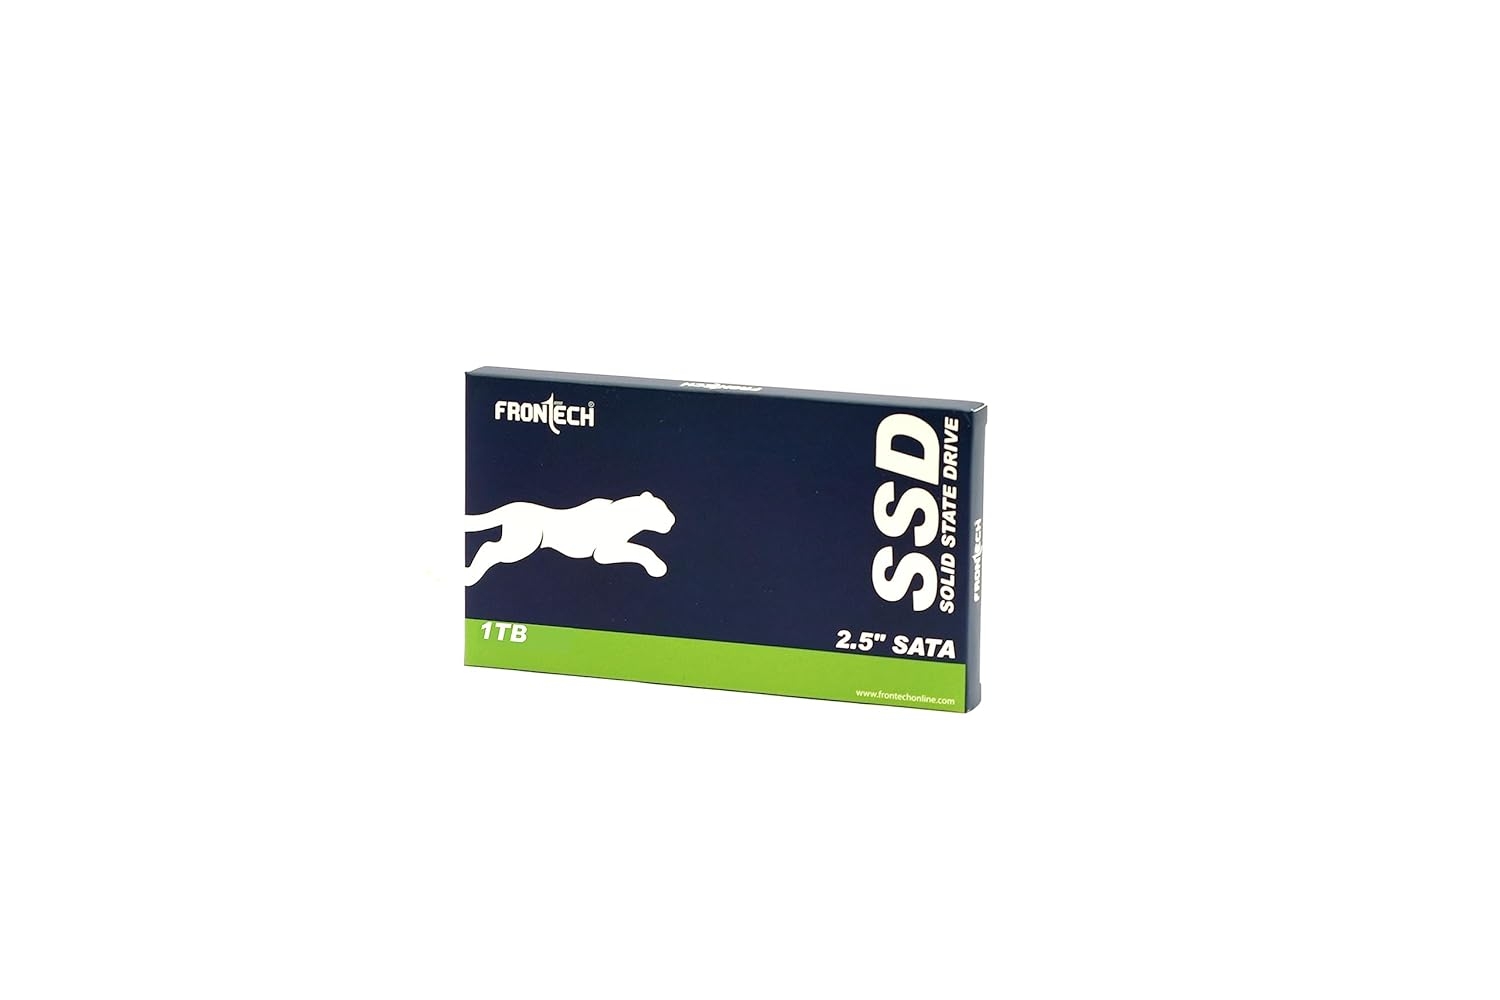 FRONTECH 1 TB Internal SSD, 2.5 SATA, TLC+REALTEK, Fast | Read/Write Speed 500/460 Mbps (SSD-0033)